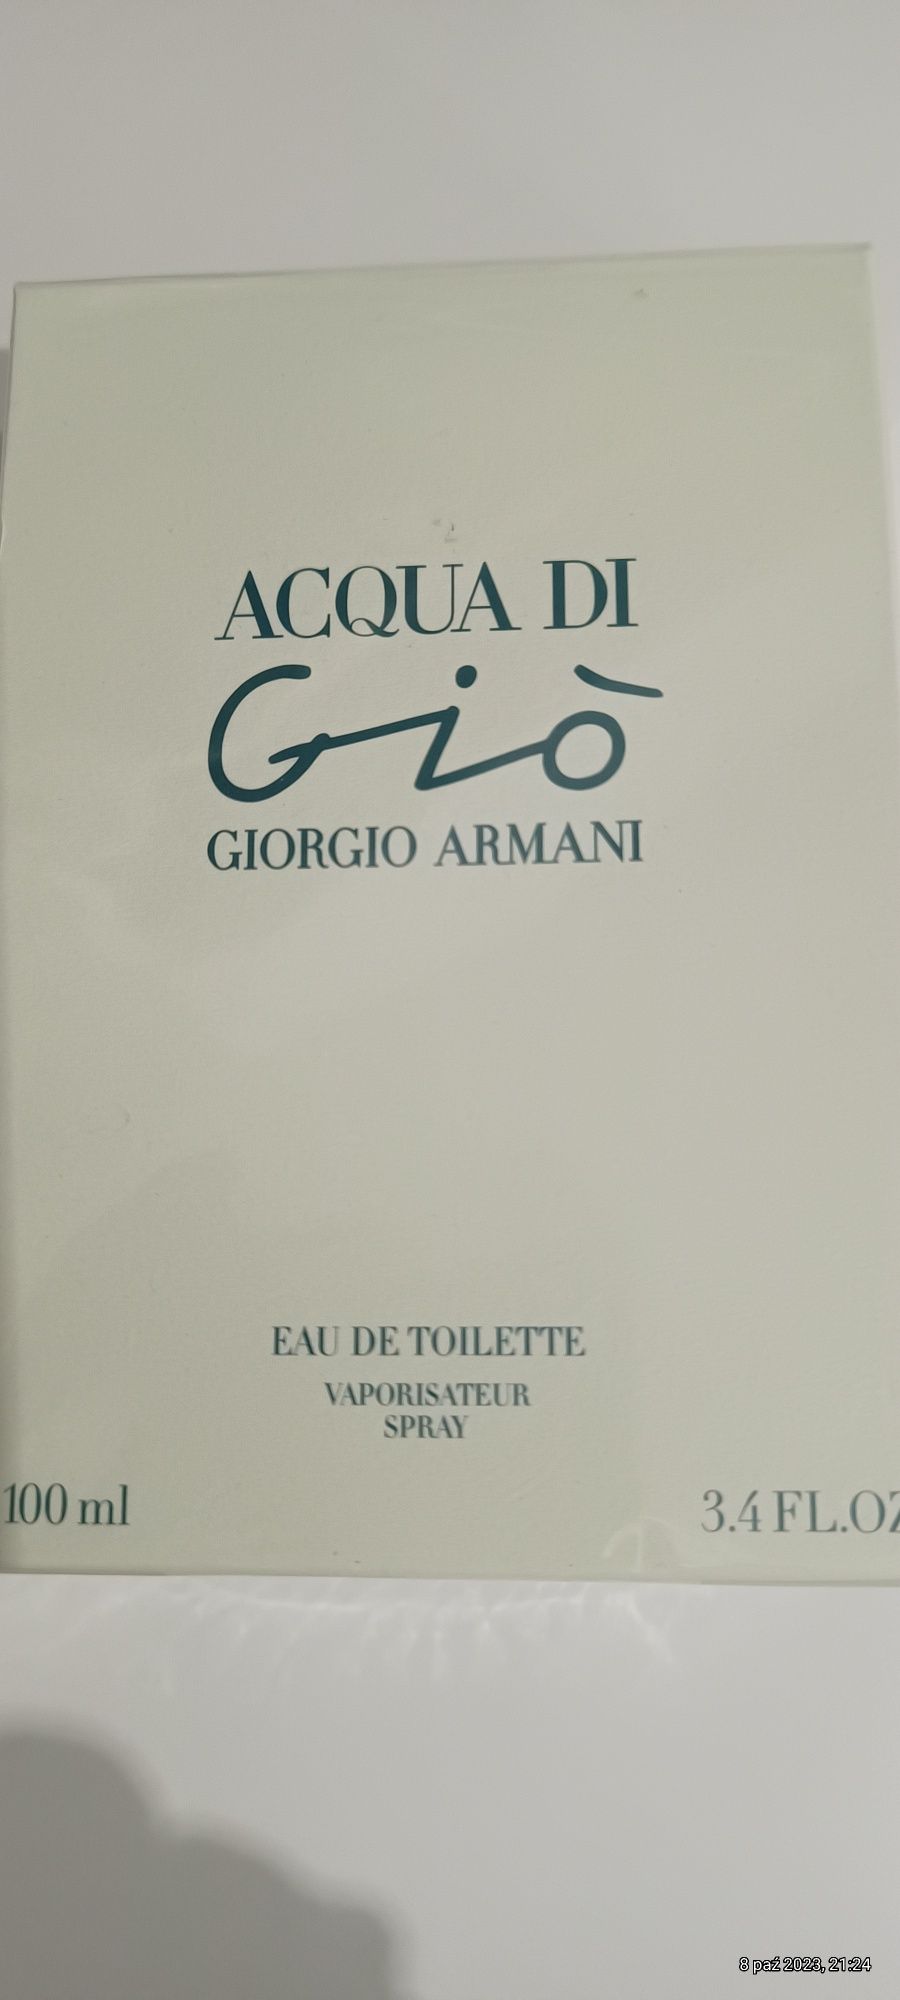 Acqua di Gio Giorgio Armani woda toaletowa eau de toilette 100ml